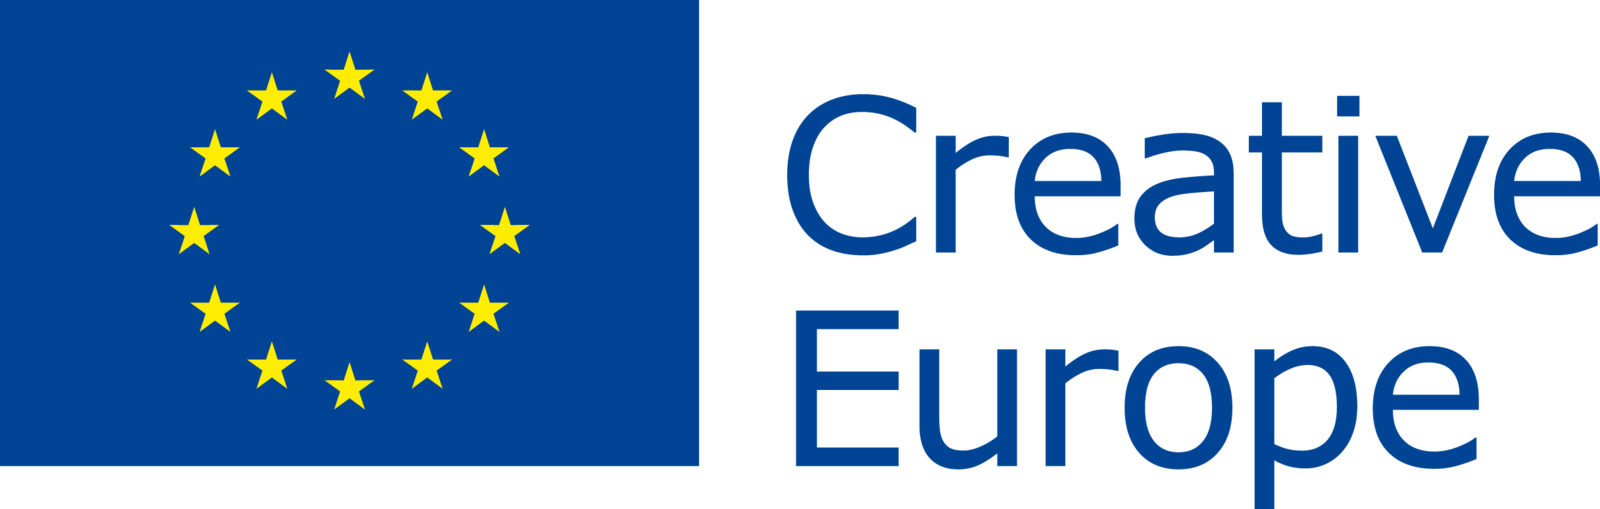 Creative Europe - Hope!